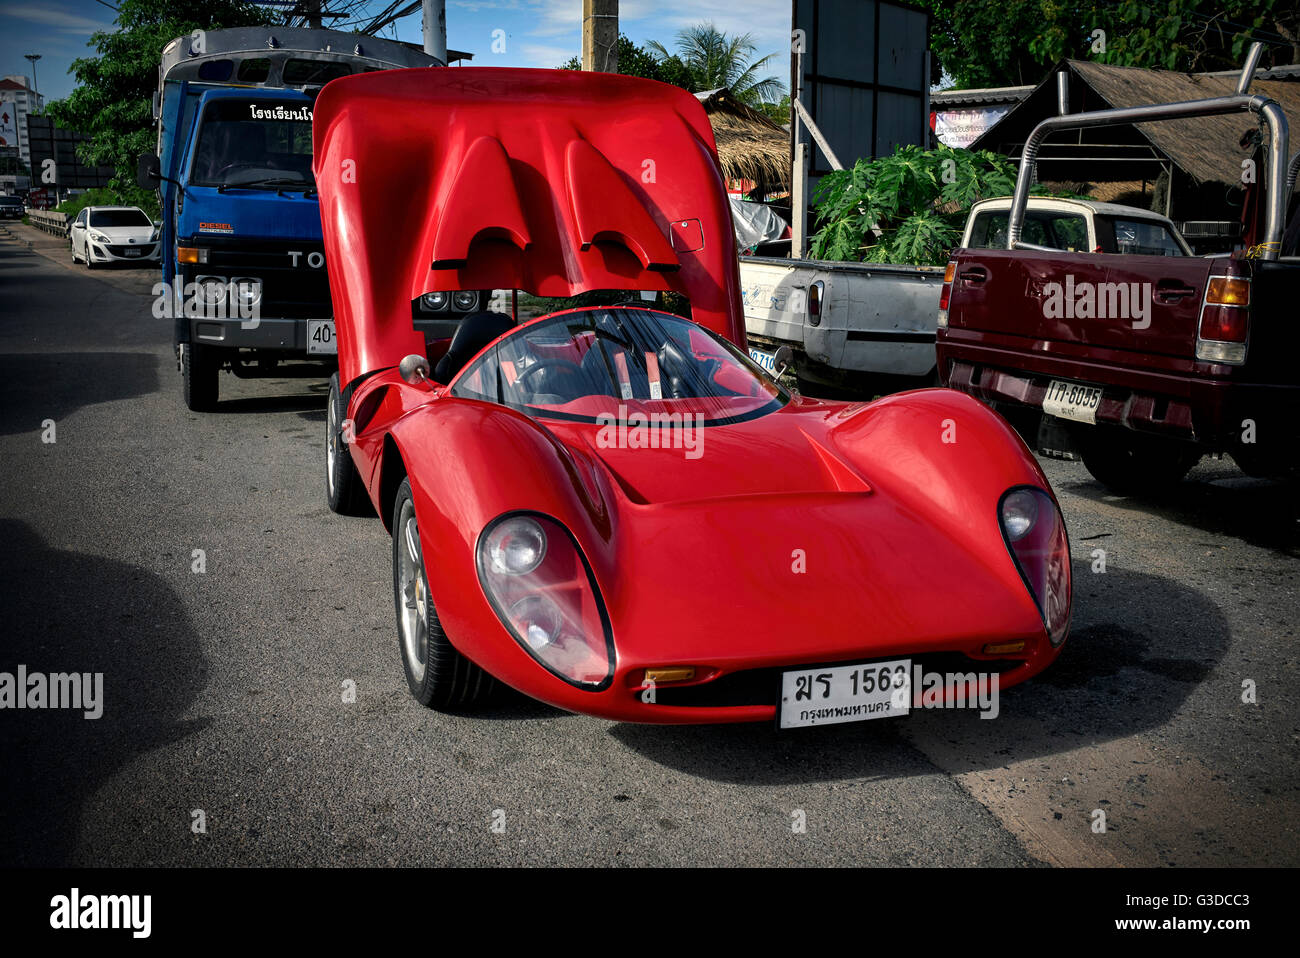 Kit car.  Ferrari look a like kit car in red. Stock Photo